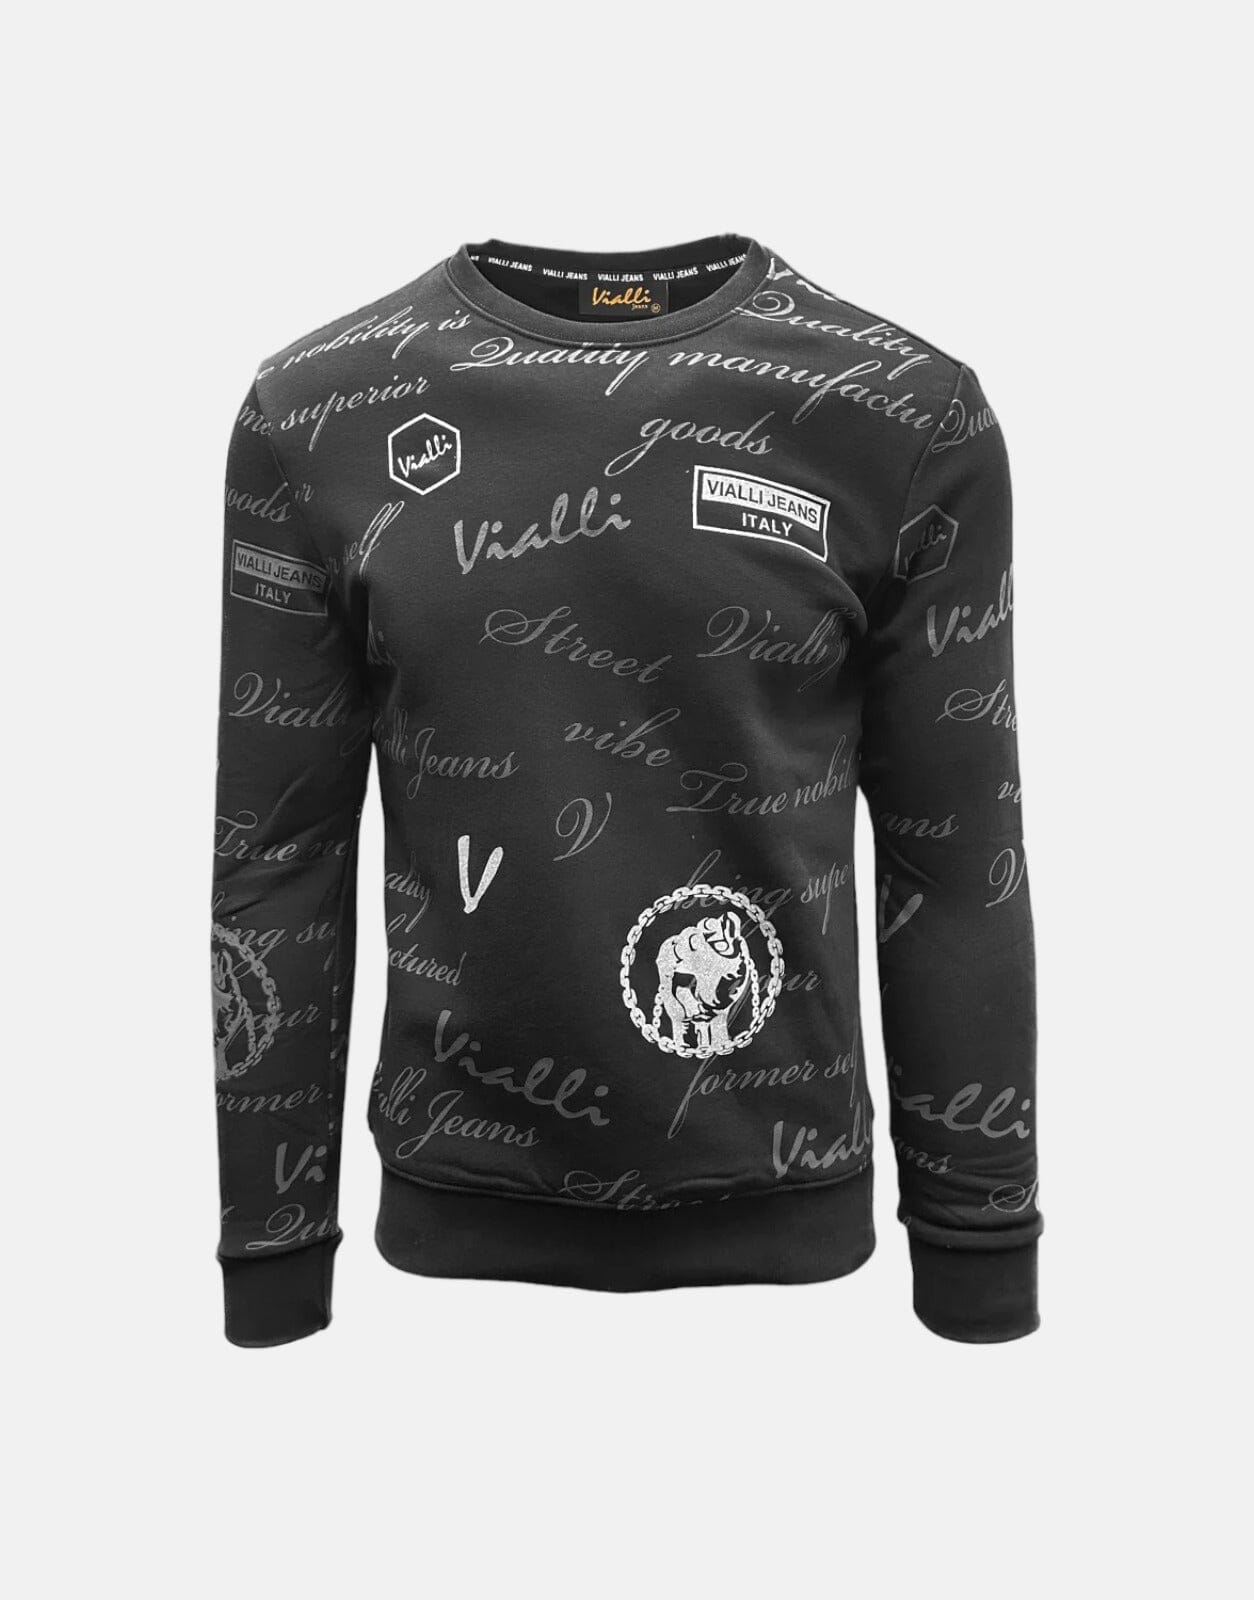 Vialli Dreamer Black Sweater – Subwear